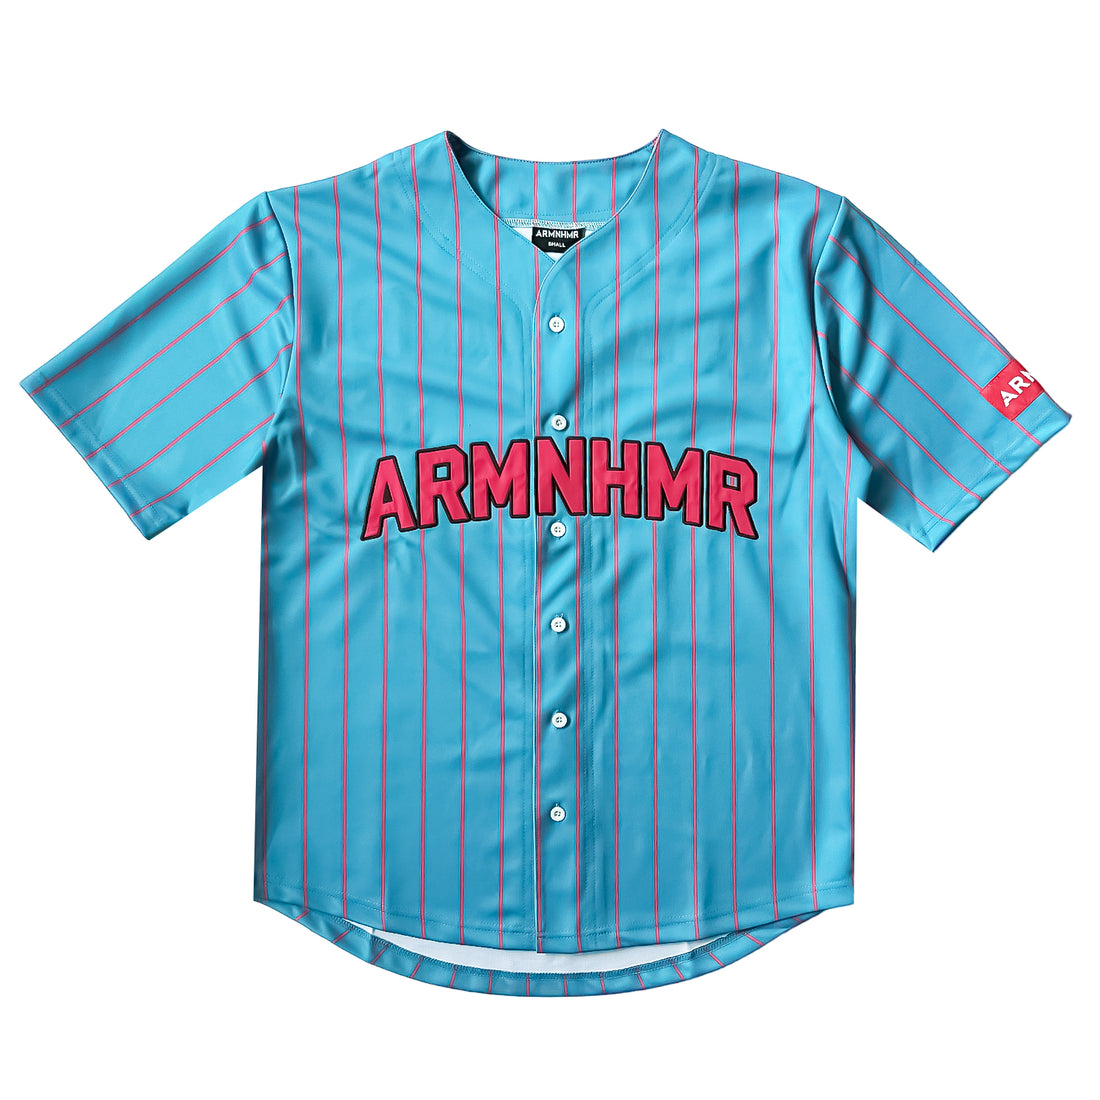 ARMNHMR - Cotton Candy - Baseball Jersey